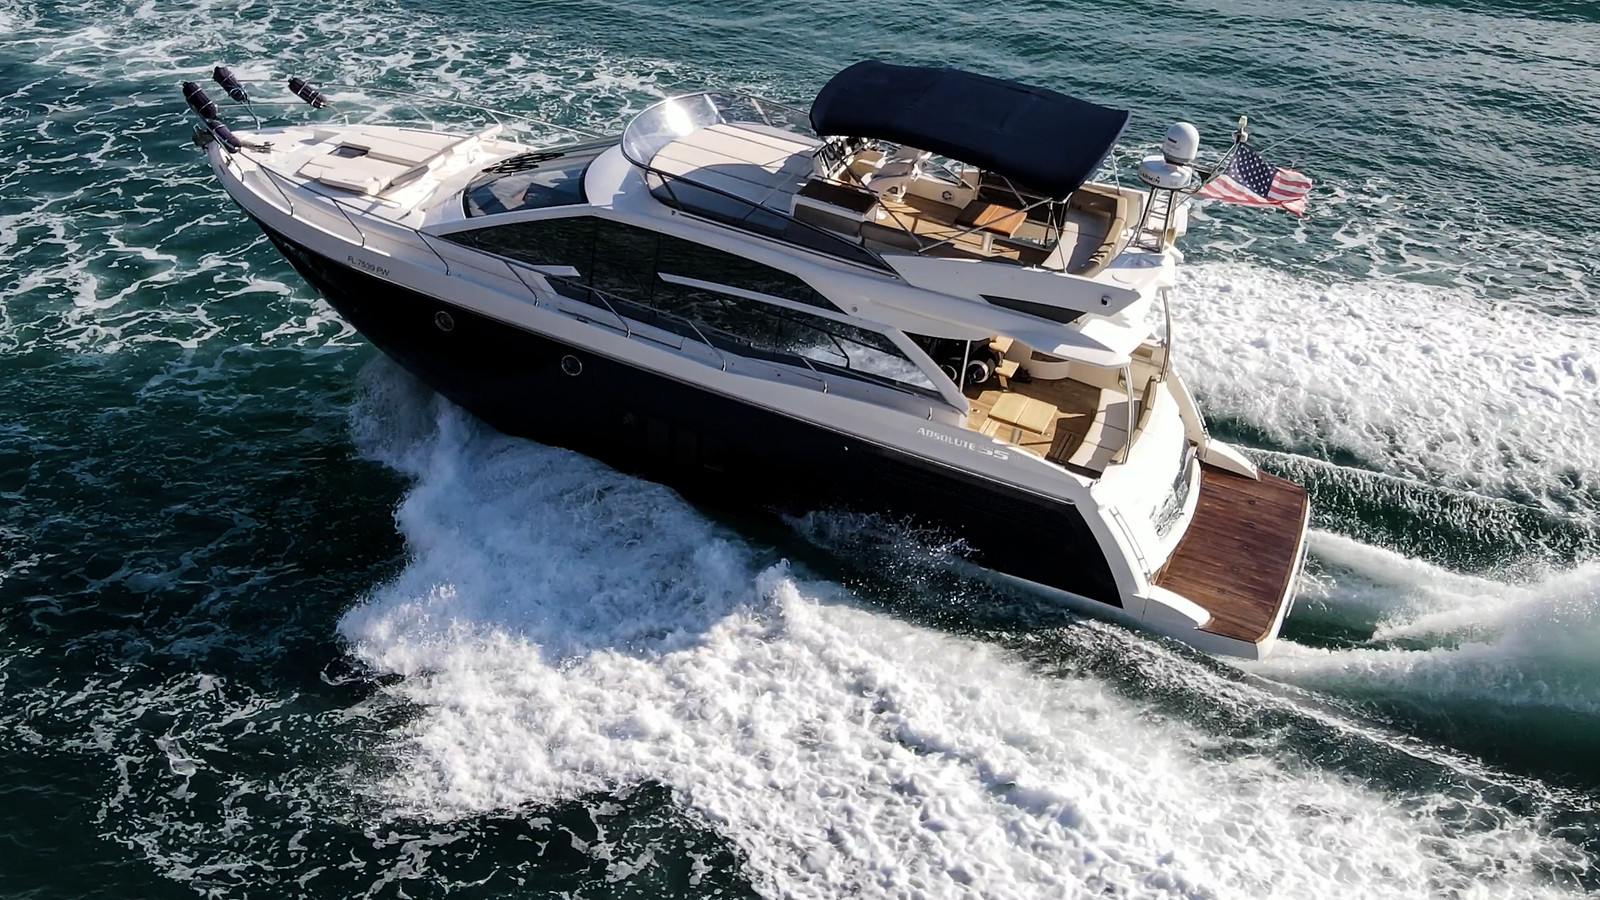 15 person yacht rental miami